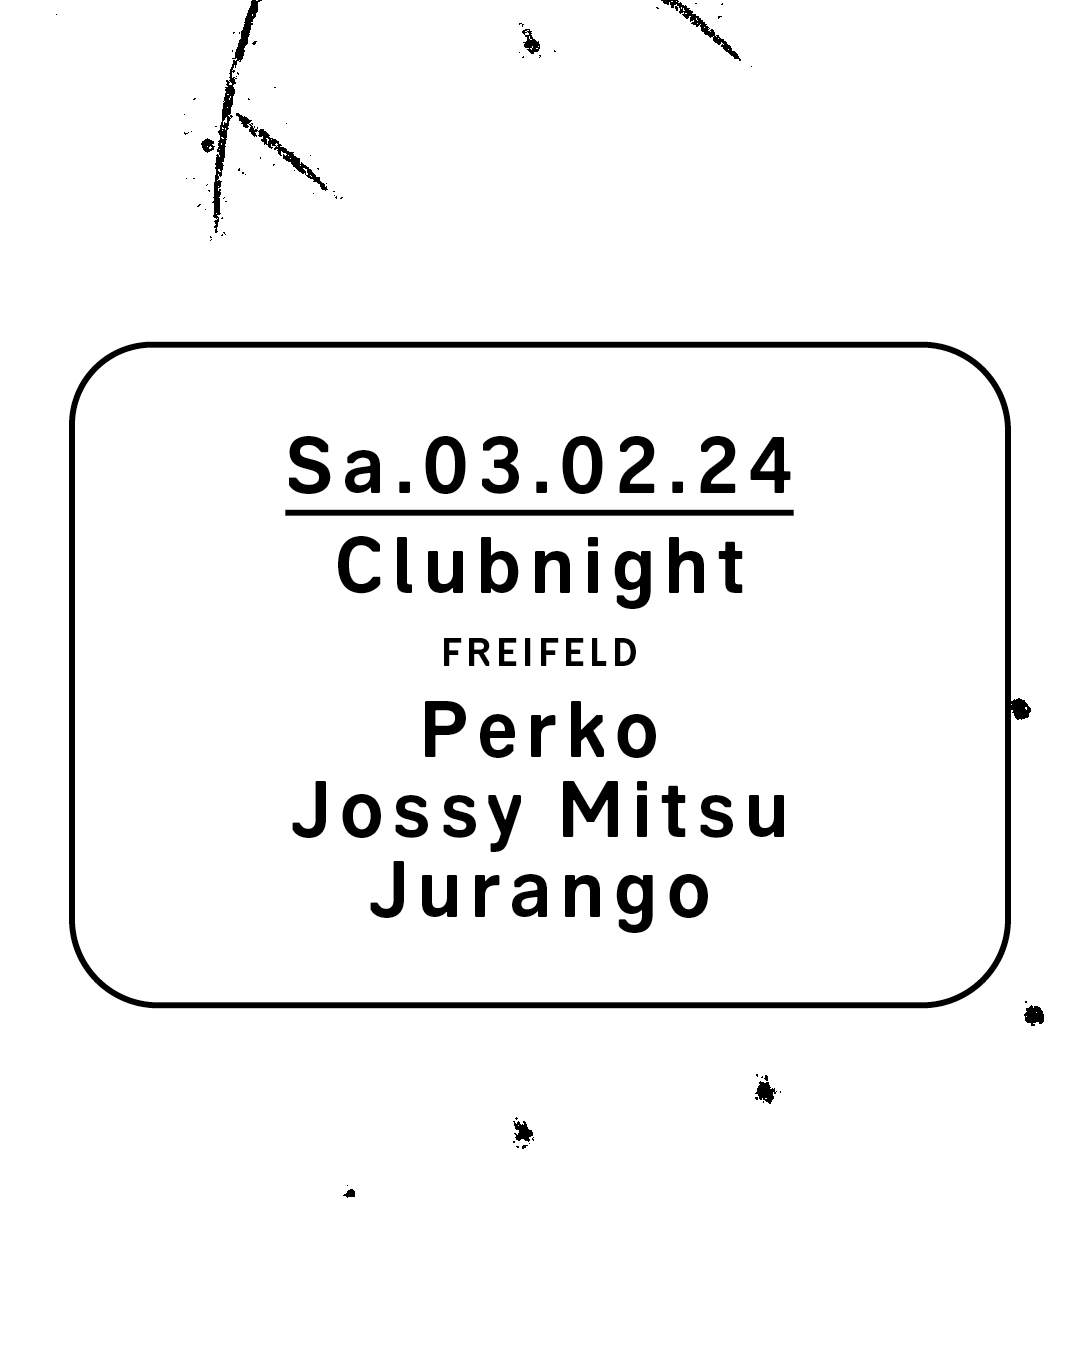 Clubnight - Perko, Jossy Mitsu, Jurango - フライヤー裏